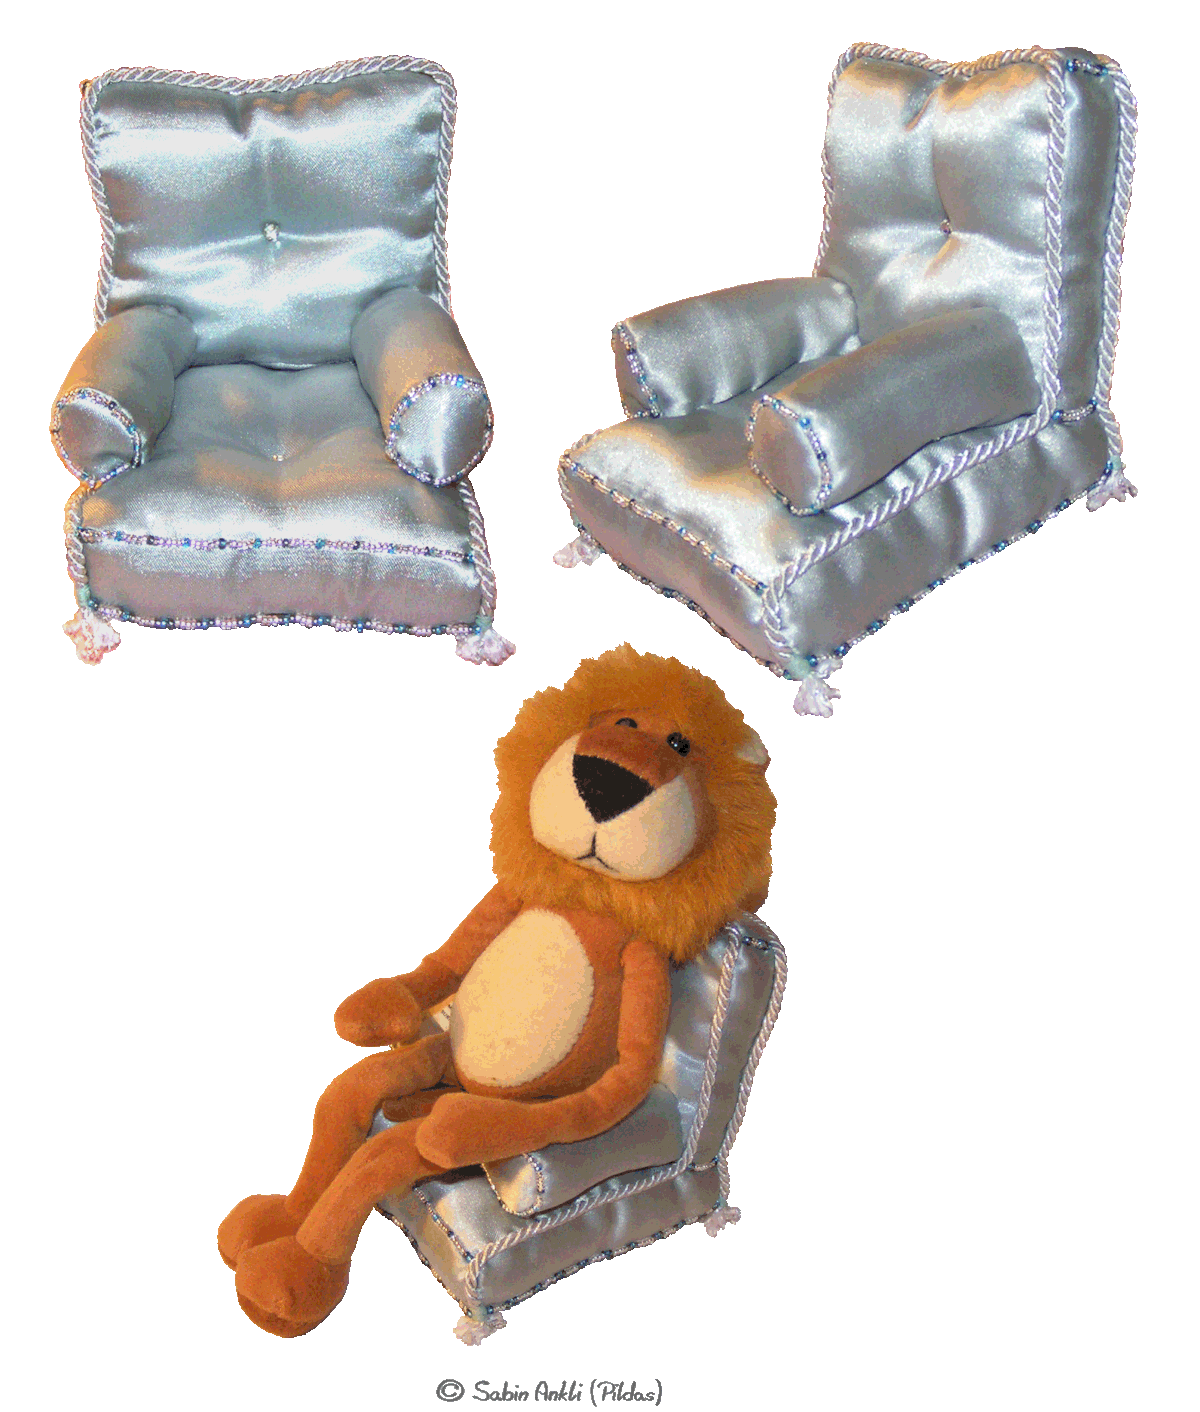 sofa Couche doll Teddy stuffed toy fabric cellphone furniture barbie teddy bear